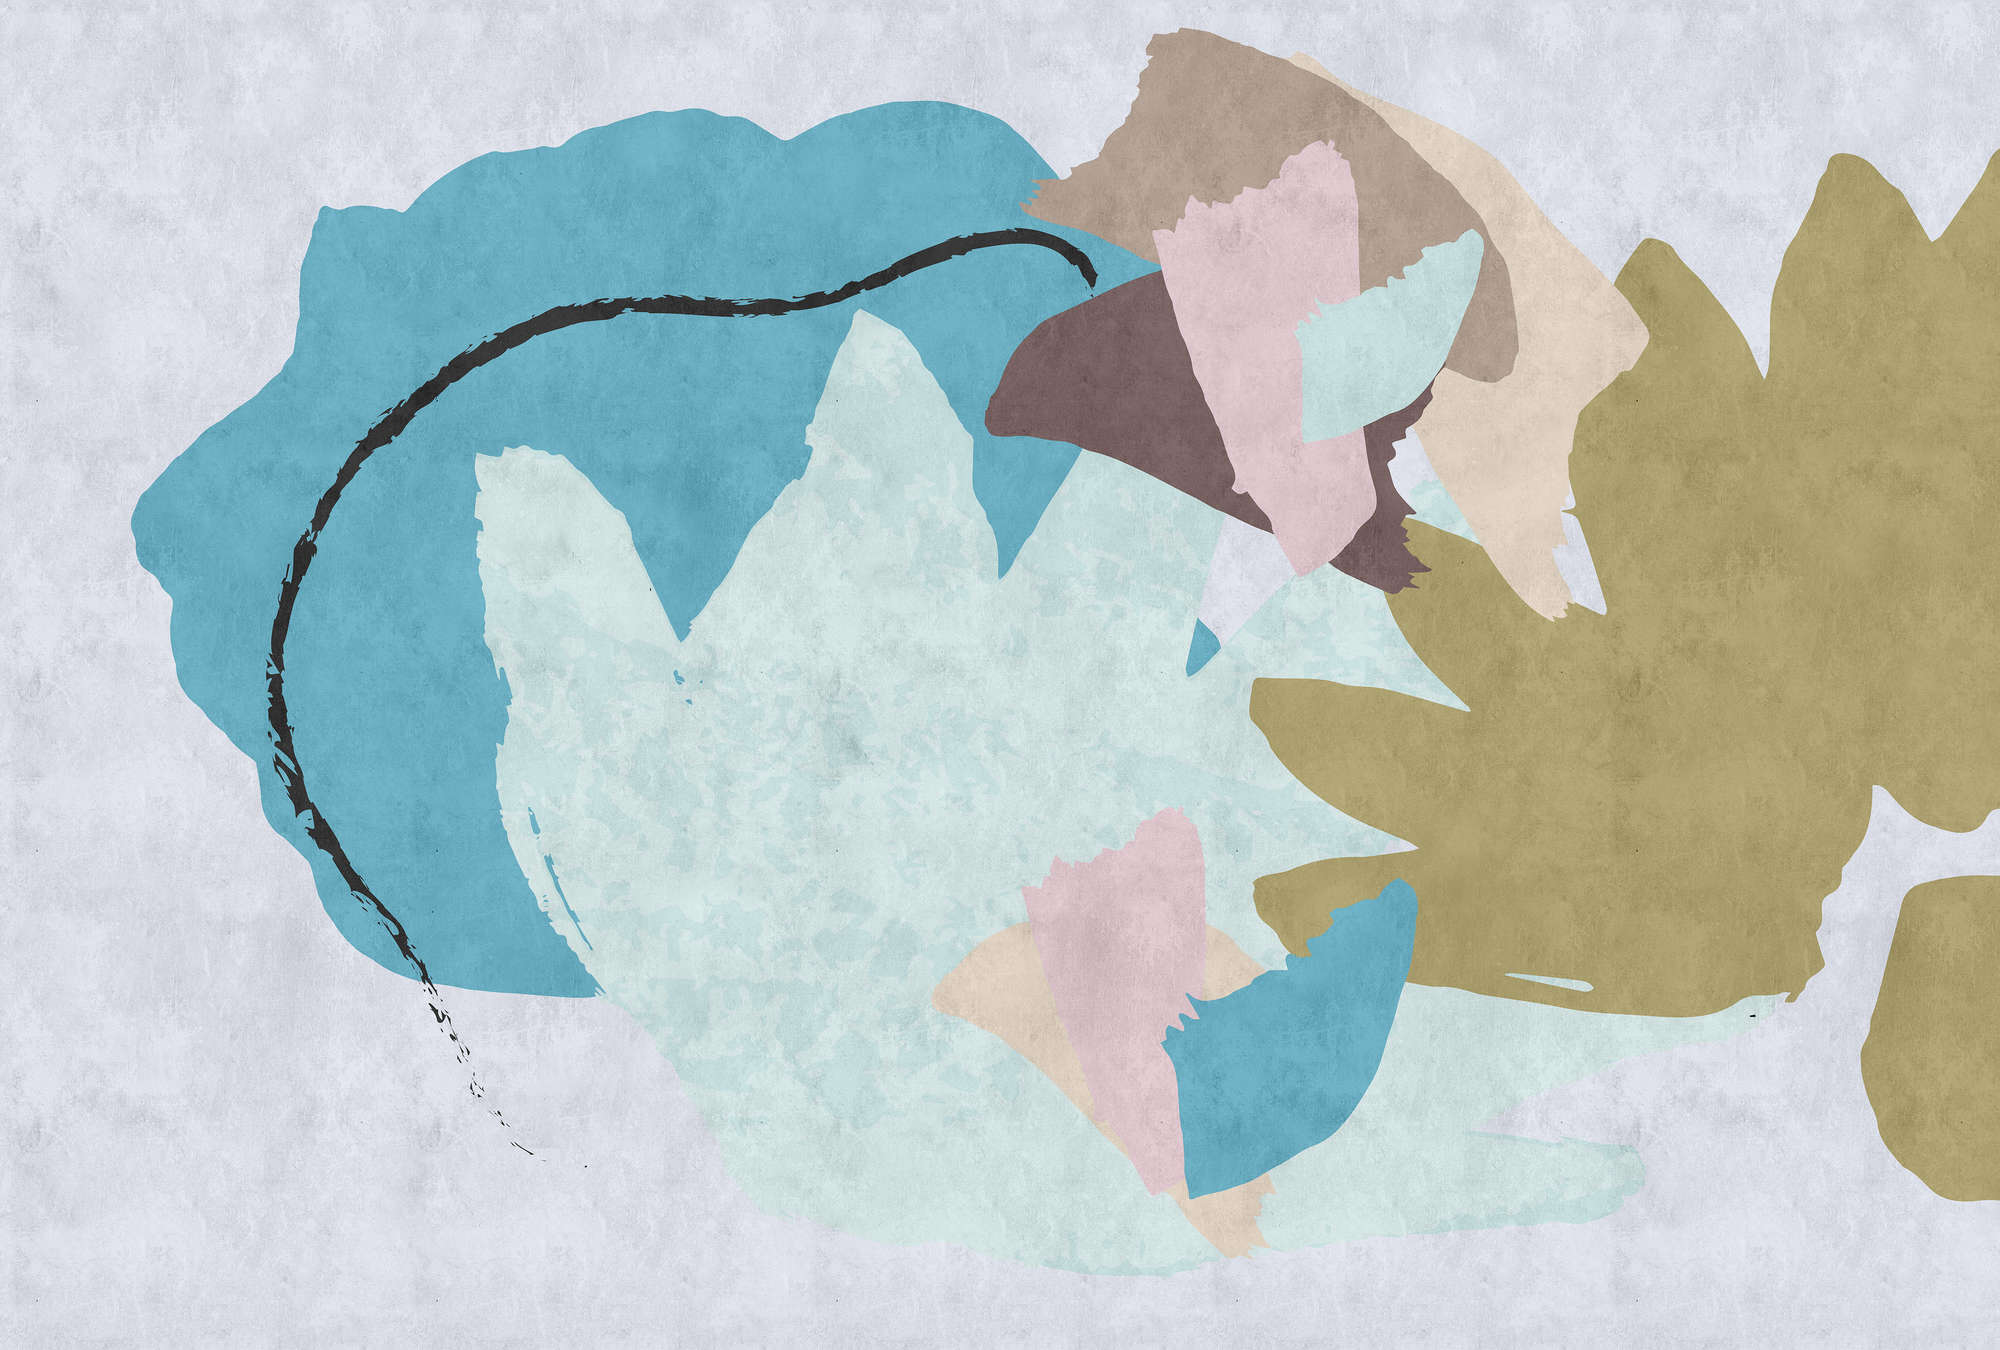             Floral Collage 1 - carta da parati astratta con stampa digitale, struttura in carta assorbente colorata - beige, blu | struttura in tessuto non tessuto
        